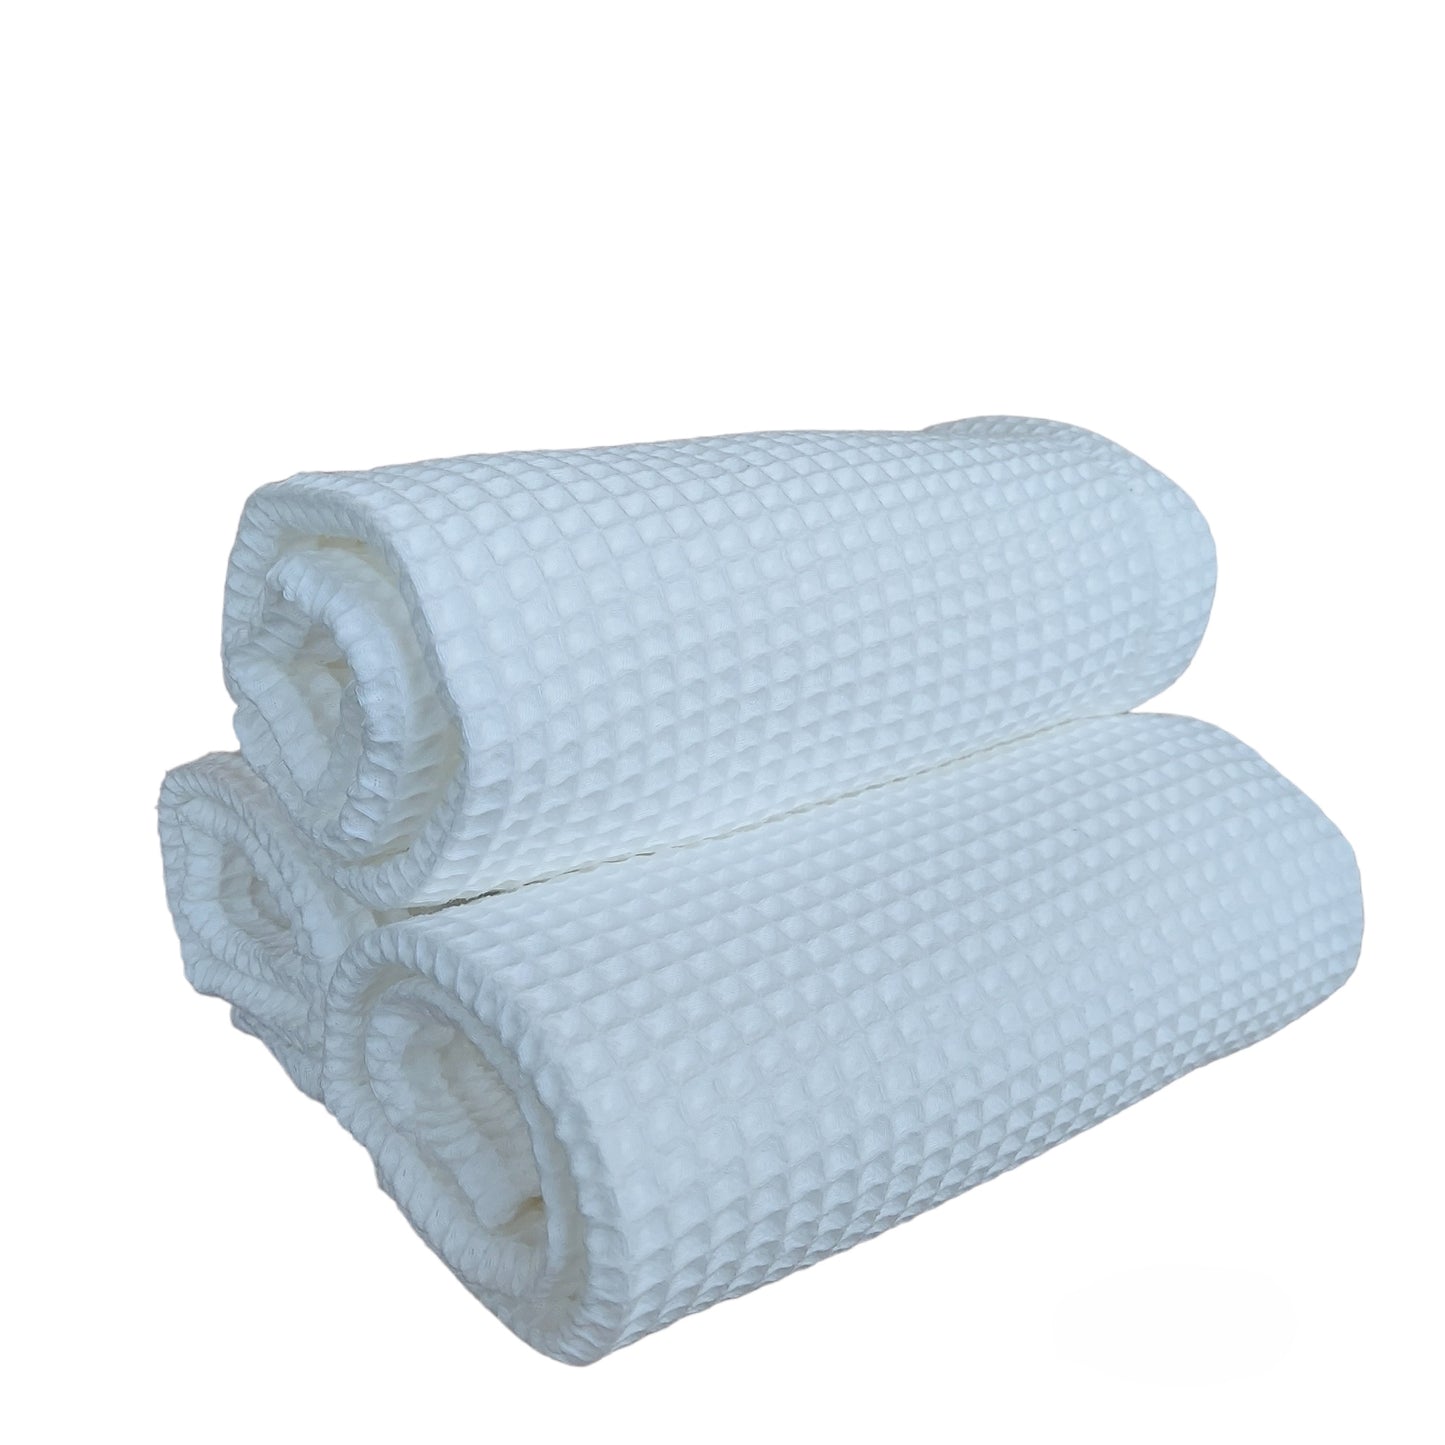 Normal bath towel size, standard size towel, bath towel for men, bath towel for women